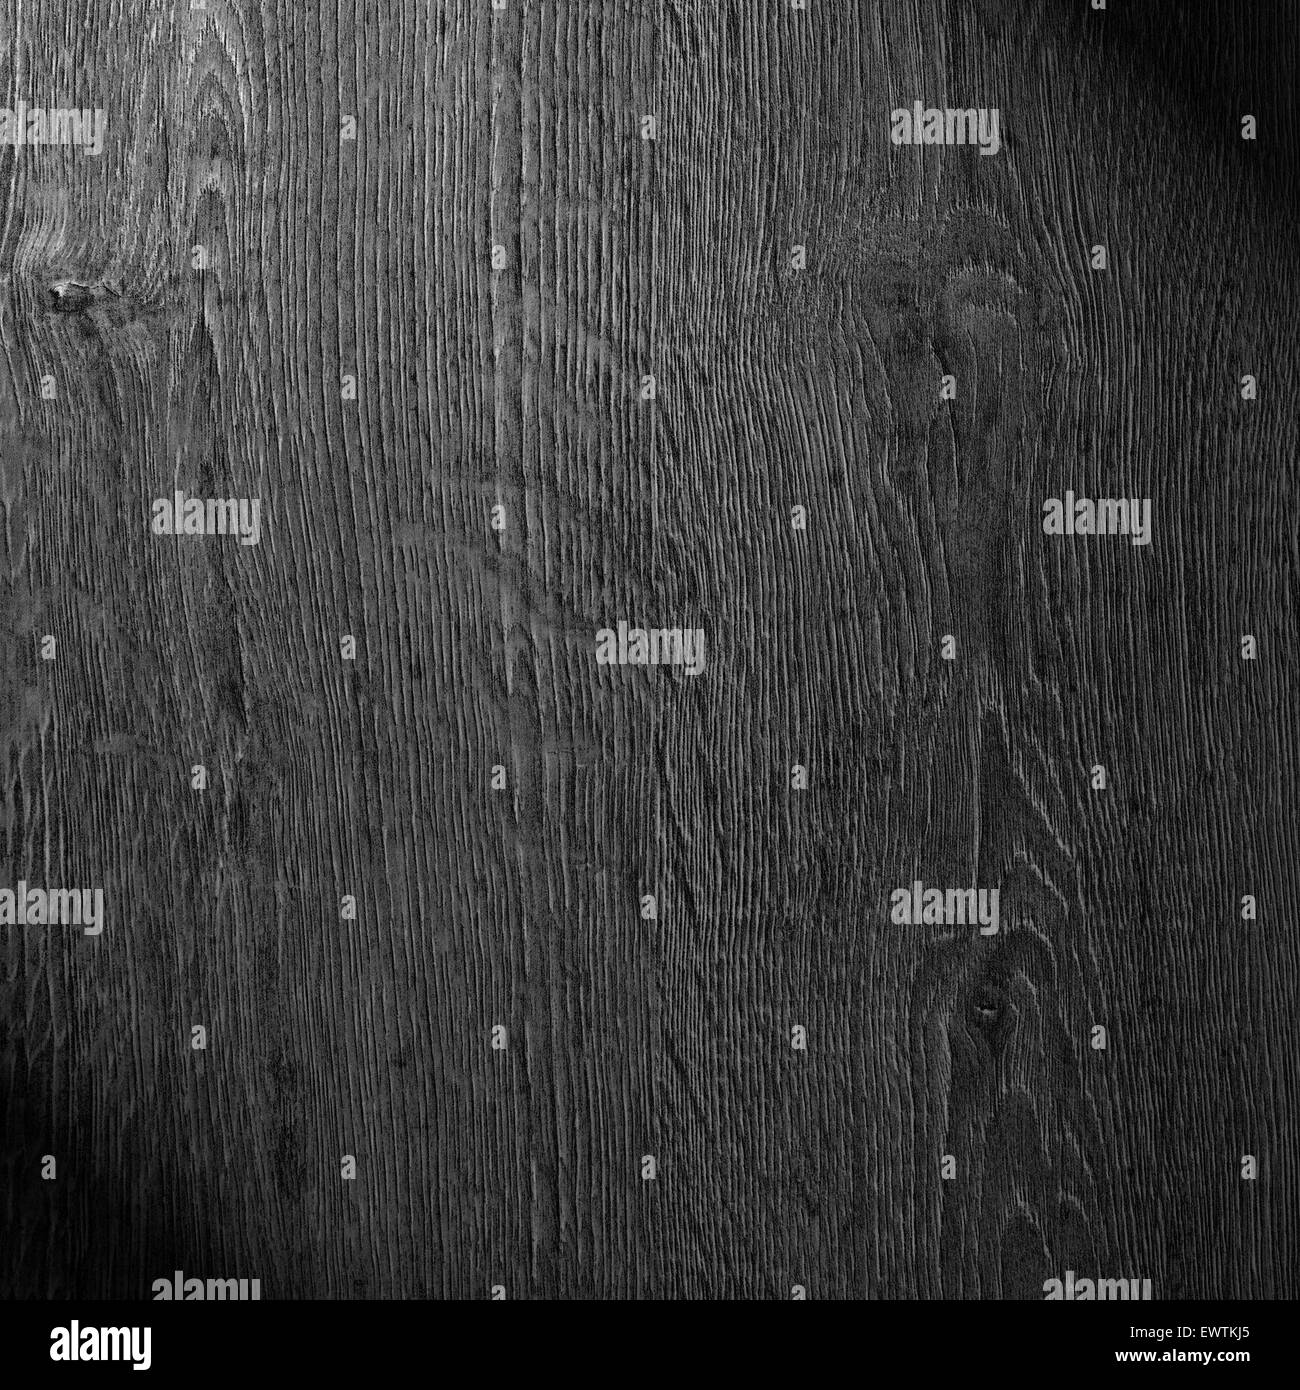 black wood background or oak furniture texture Stock Photo